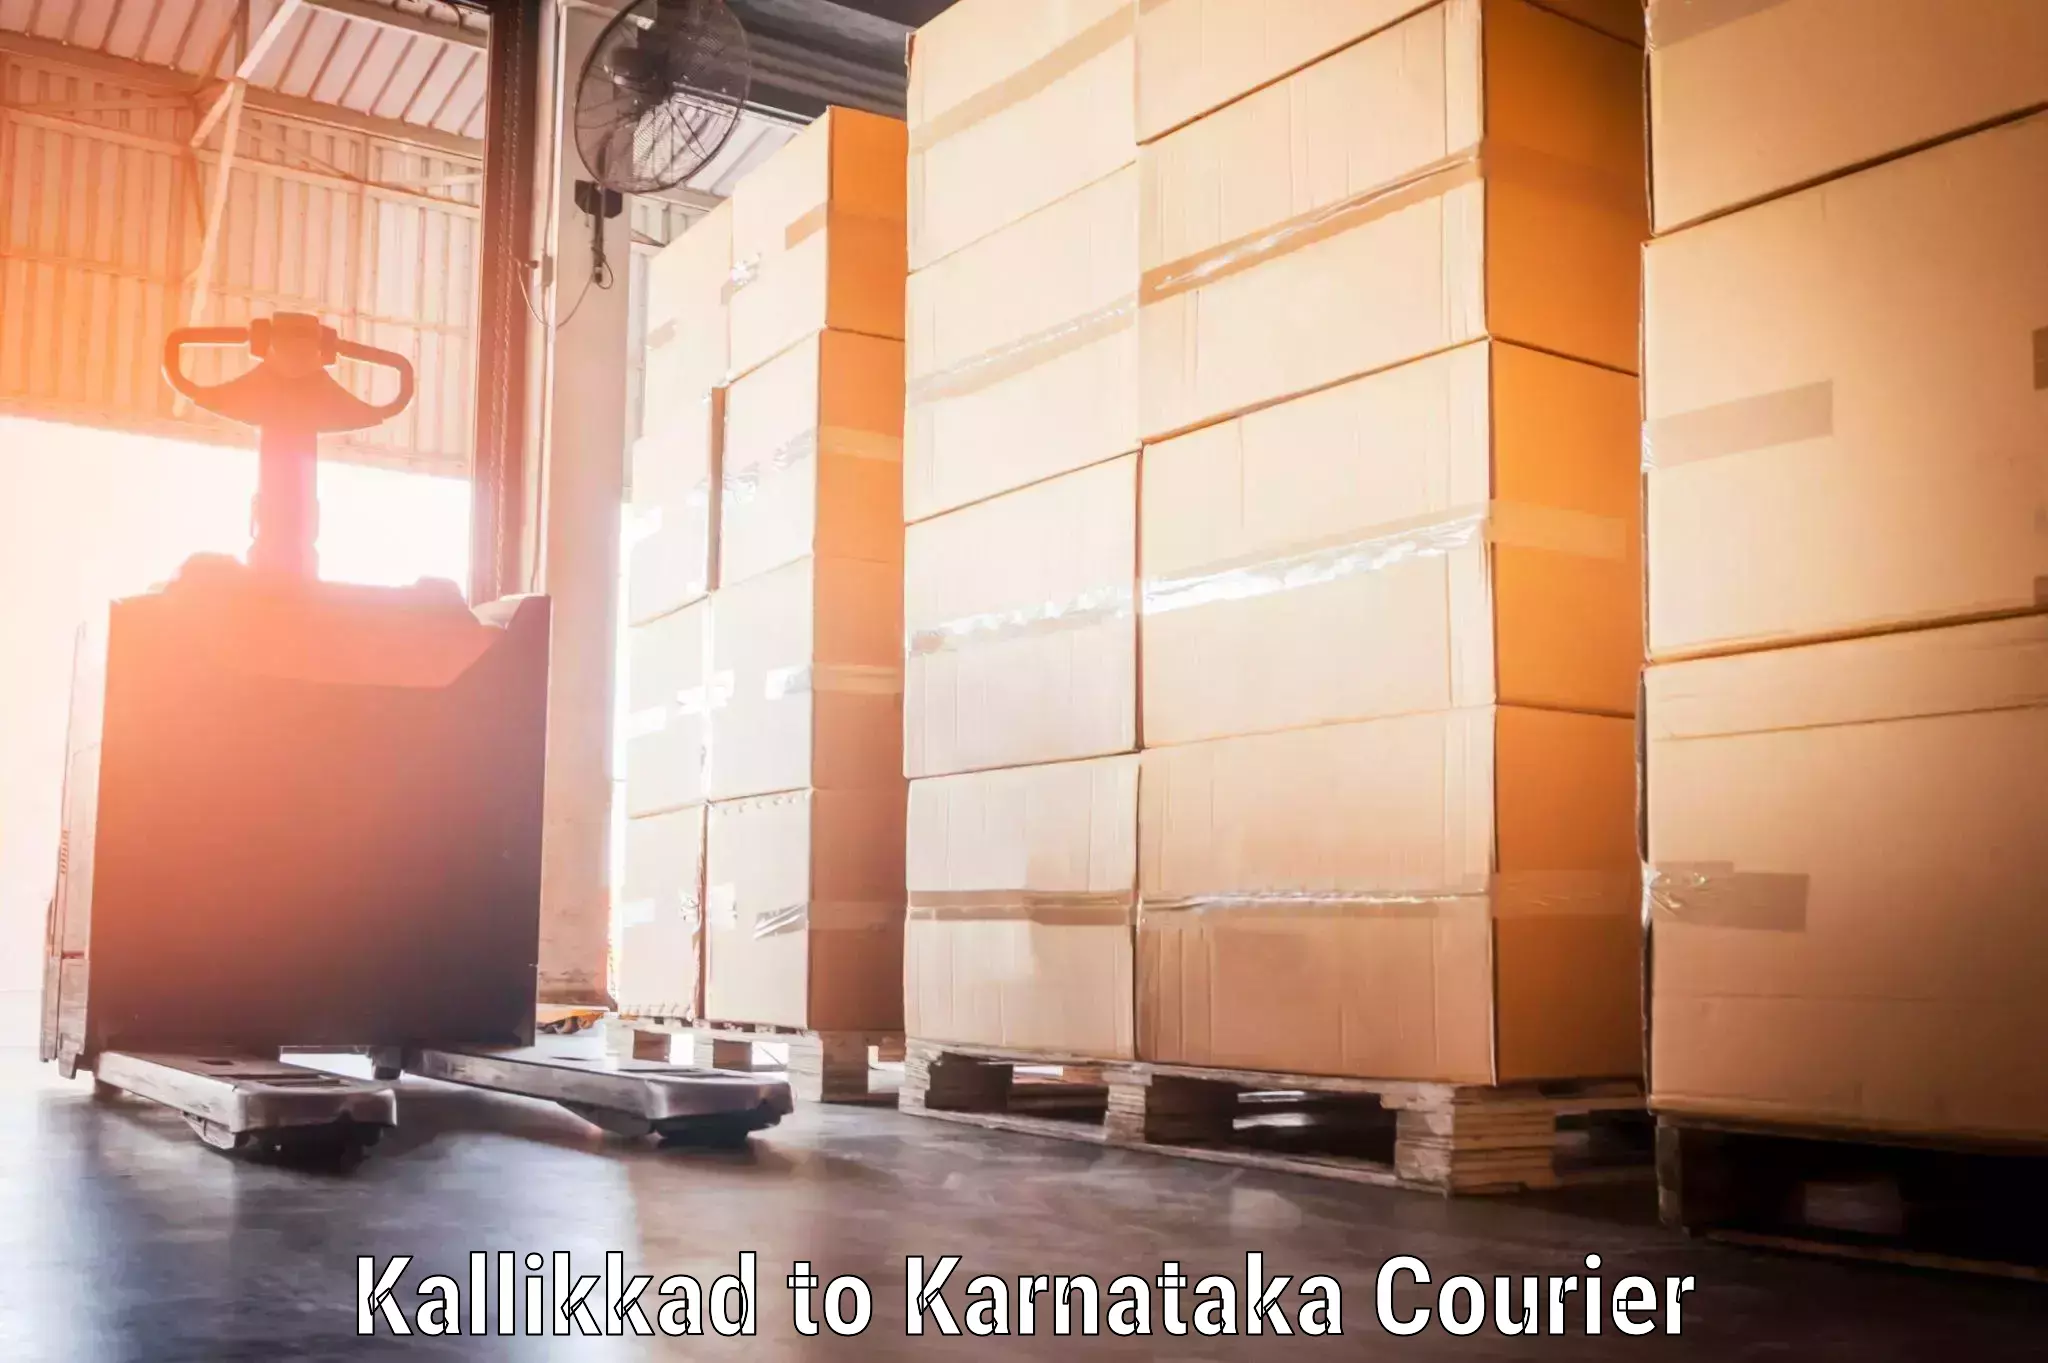 Baggage relocation service Kallikkad to Karnataka